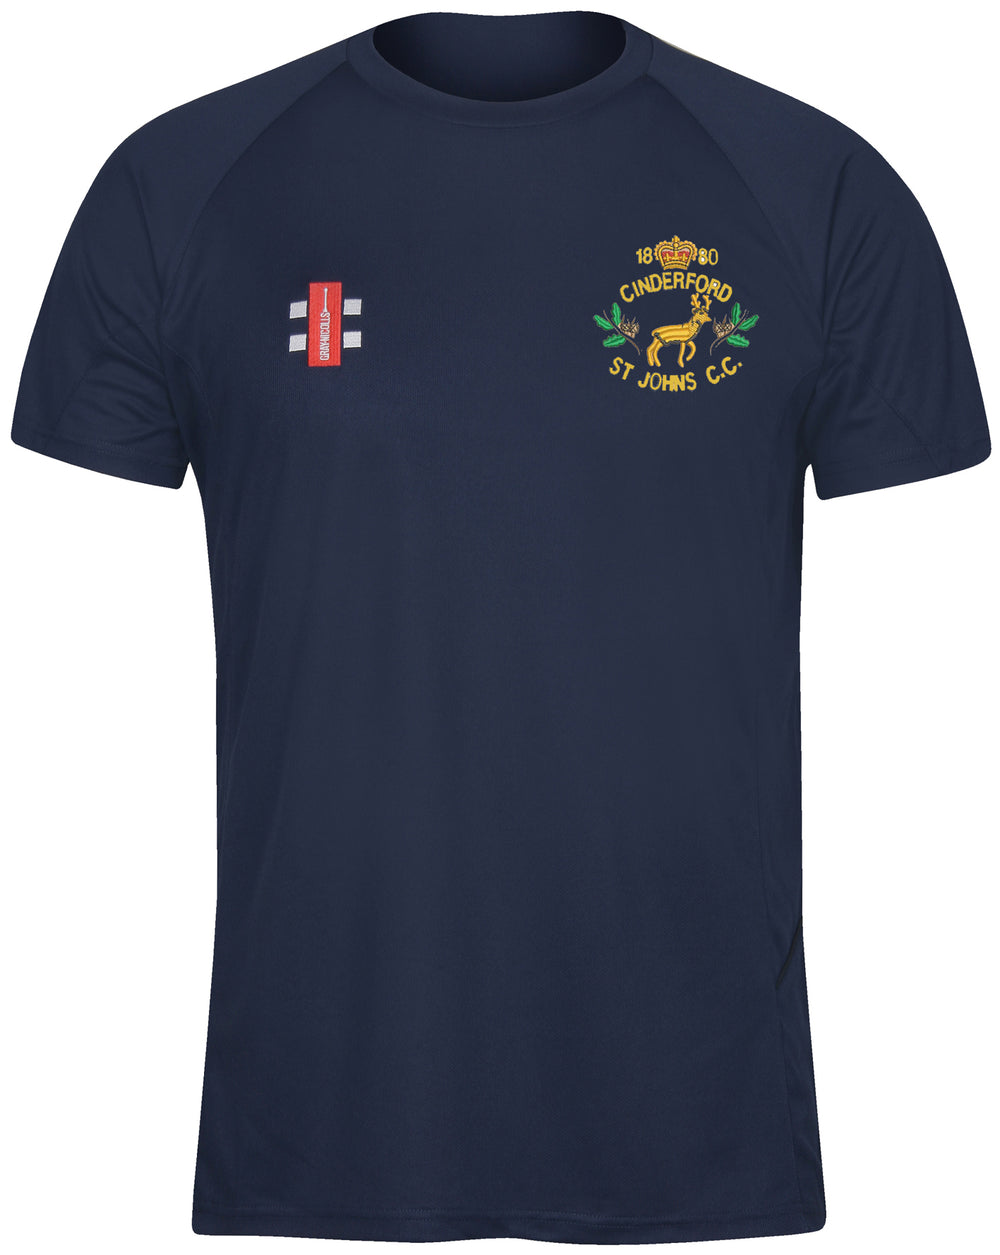 Cinderford St Johns CC Matrix T Shirt